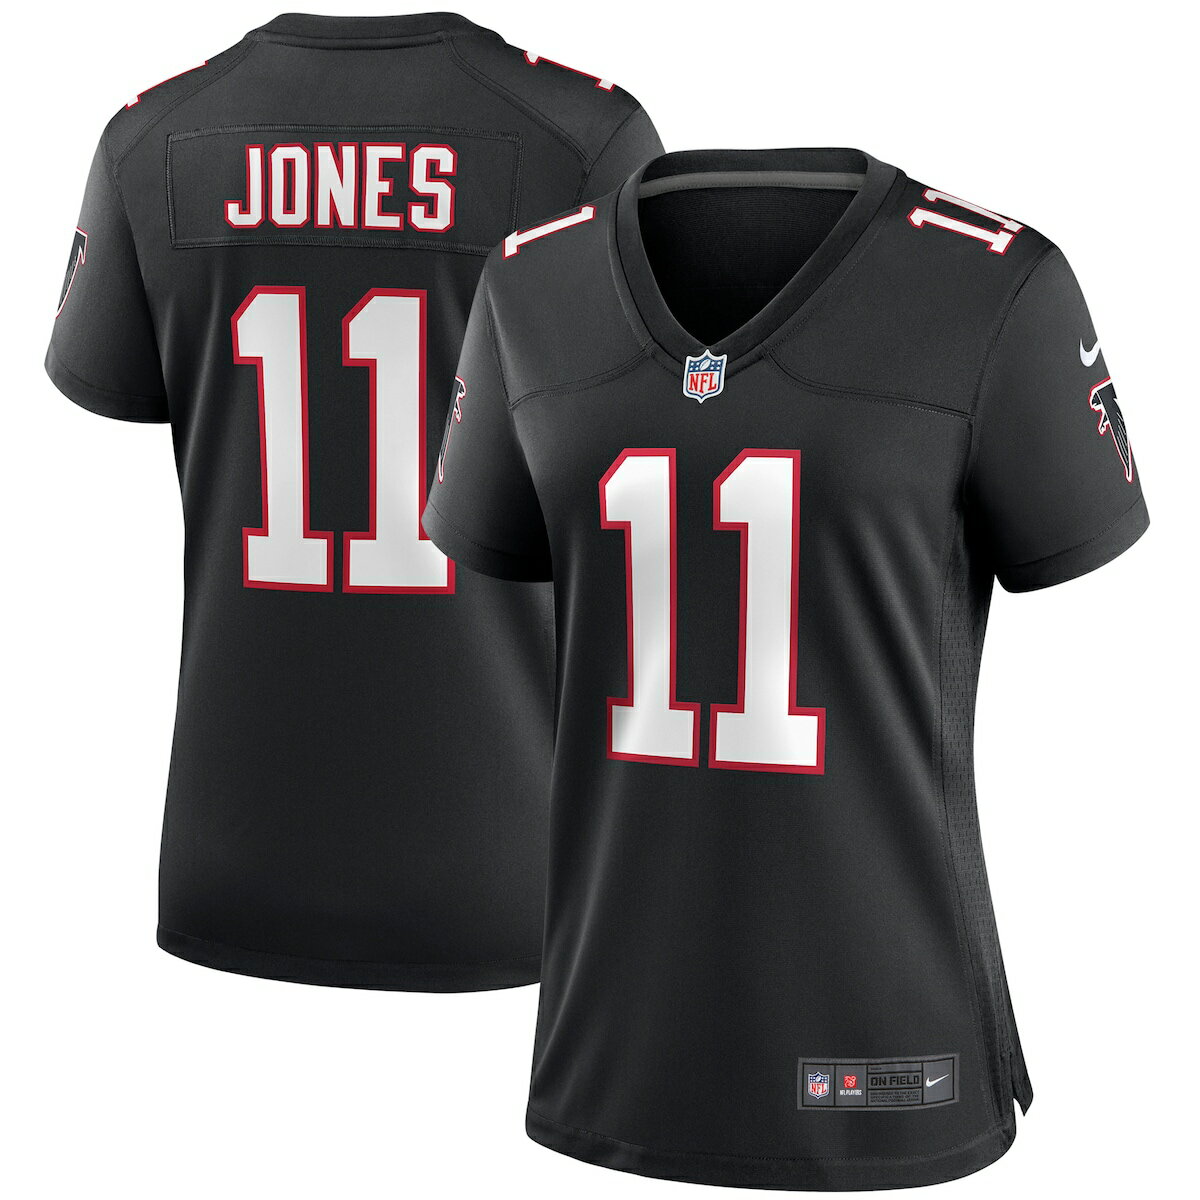 NFL ファルコンズ ジュリオ・ジョーンズ ユニフォーム Nike ナイキ レディース ブラック (Womens Nike Game NFL Jersey)